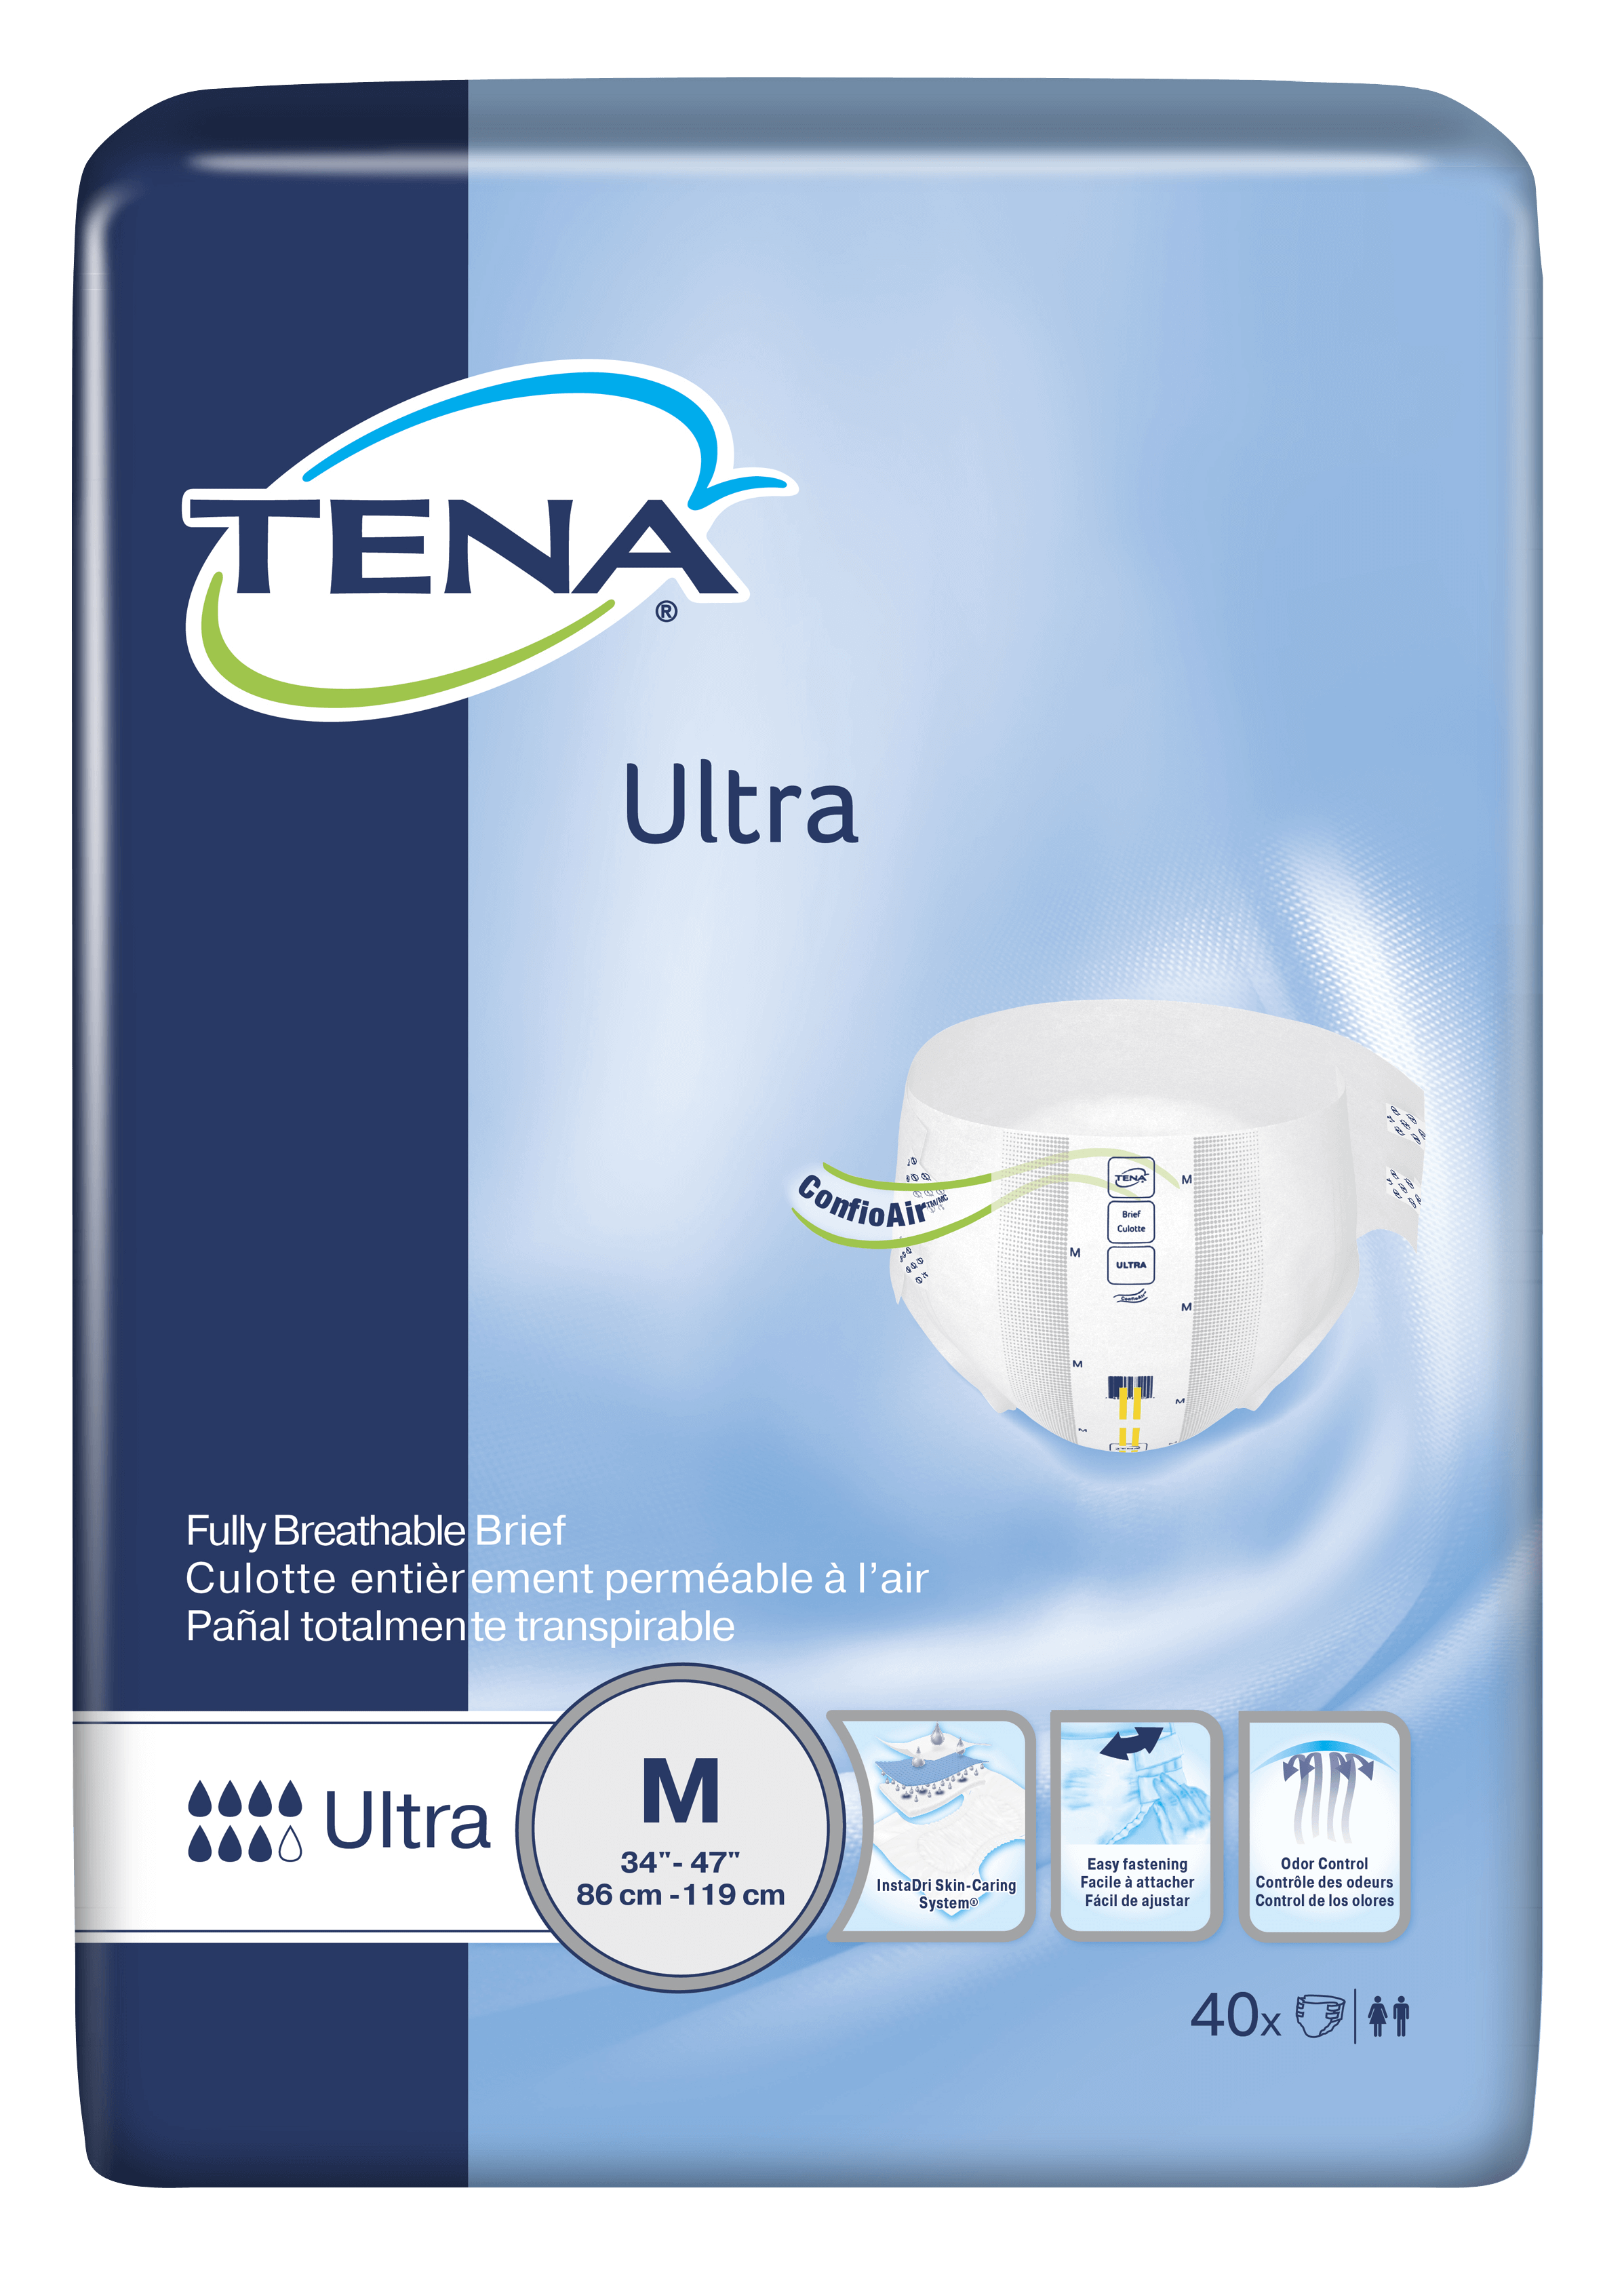 TENA Ultra Briefs for Maximum Protection